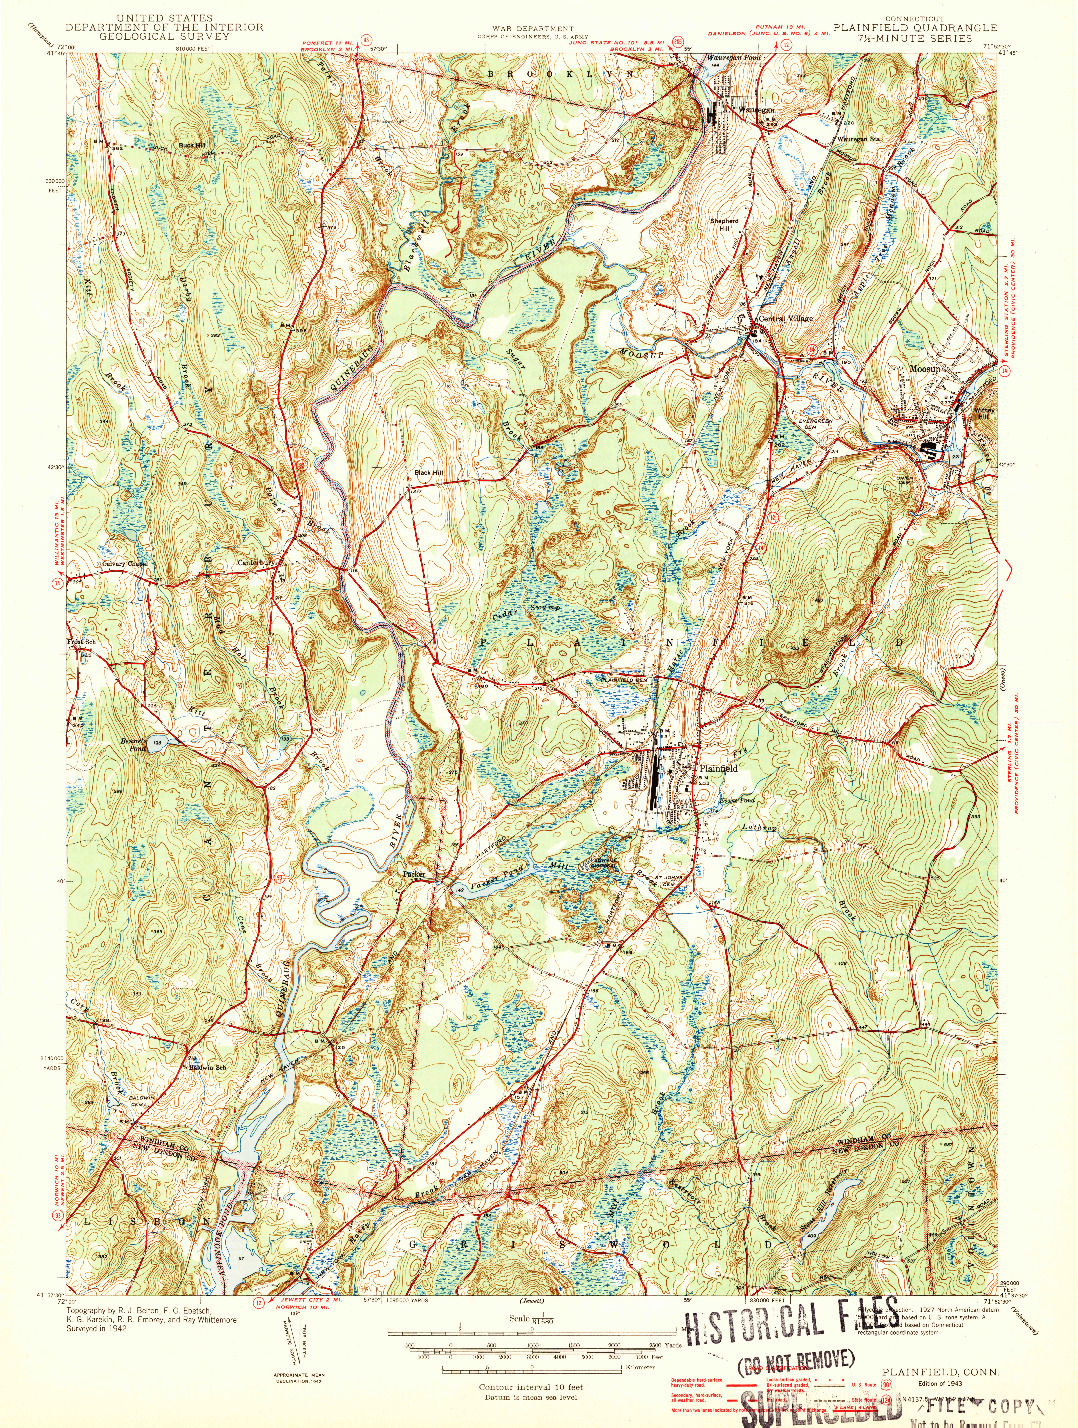 USGS 1:31680-SCALE QUADRANGLE FOR PLAINFIELD, CT 1943